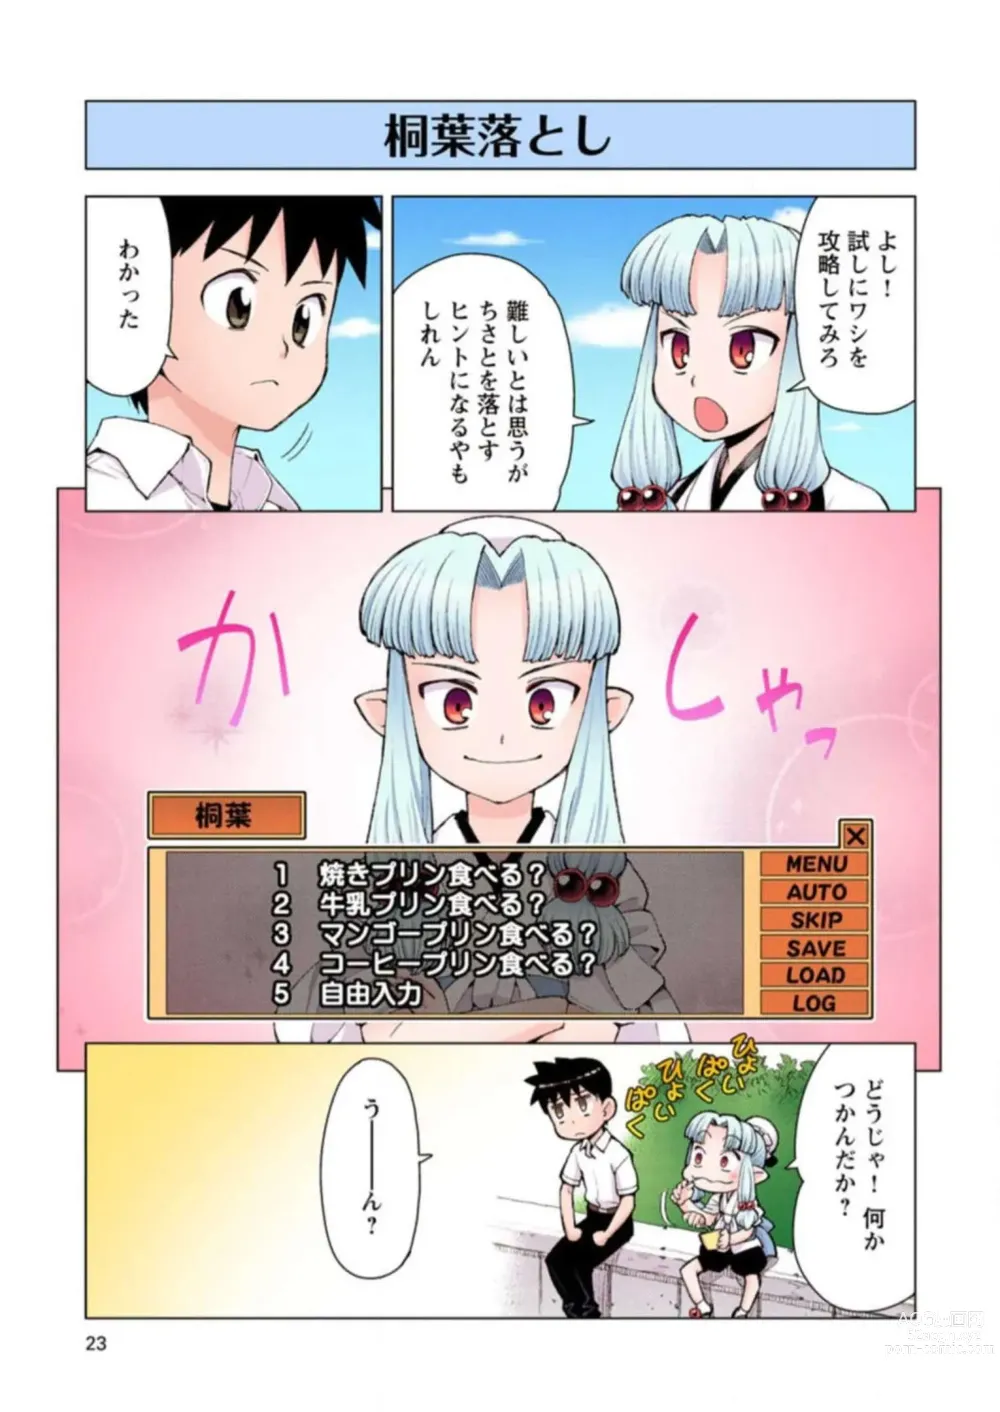 Page 23 of manga Tsugumomo Digital Colored Comics V3